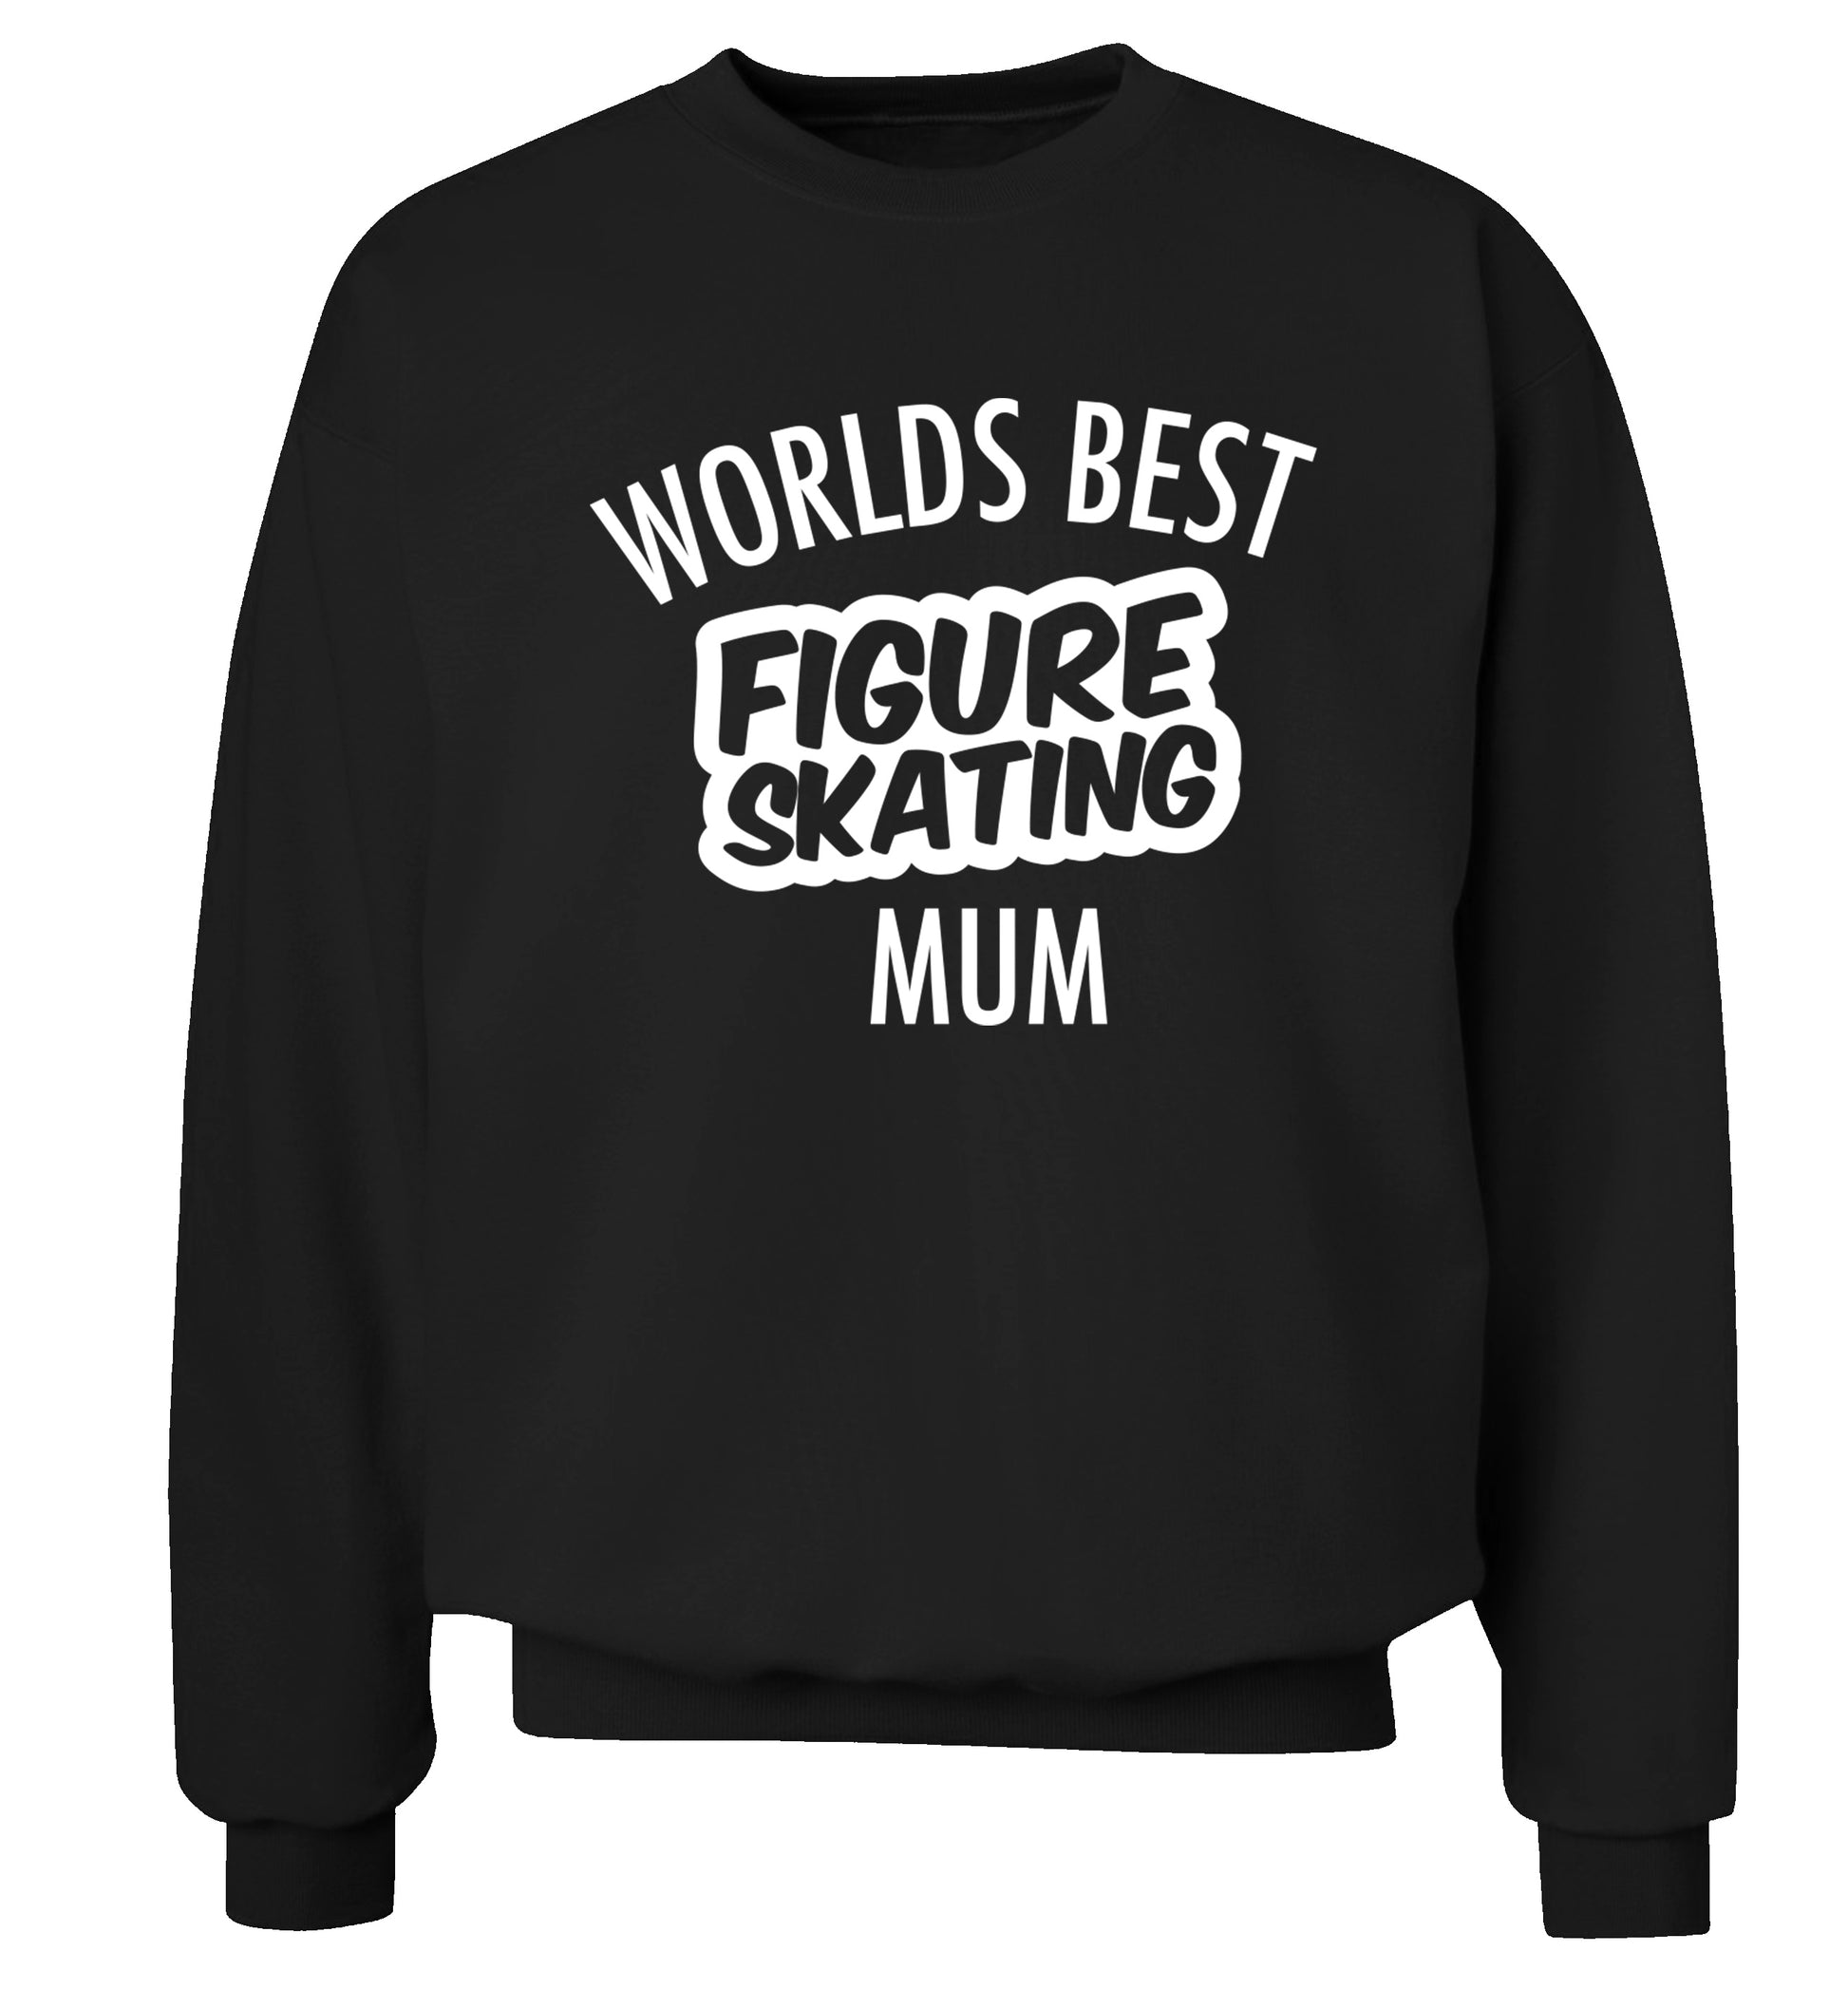 Worlds best figure skating mum Adult's unisexblack Sweater 2XL